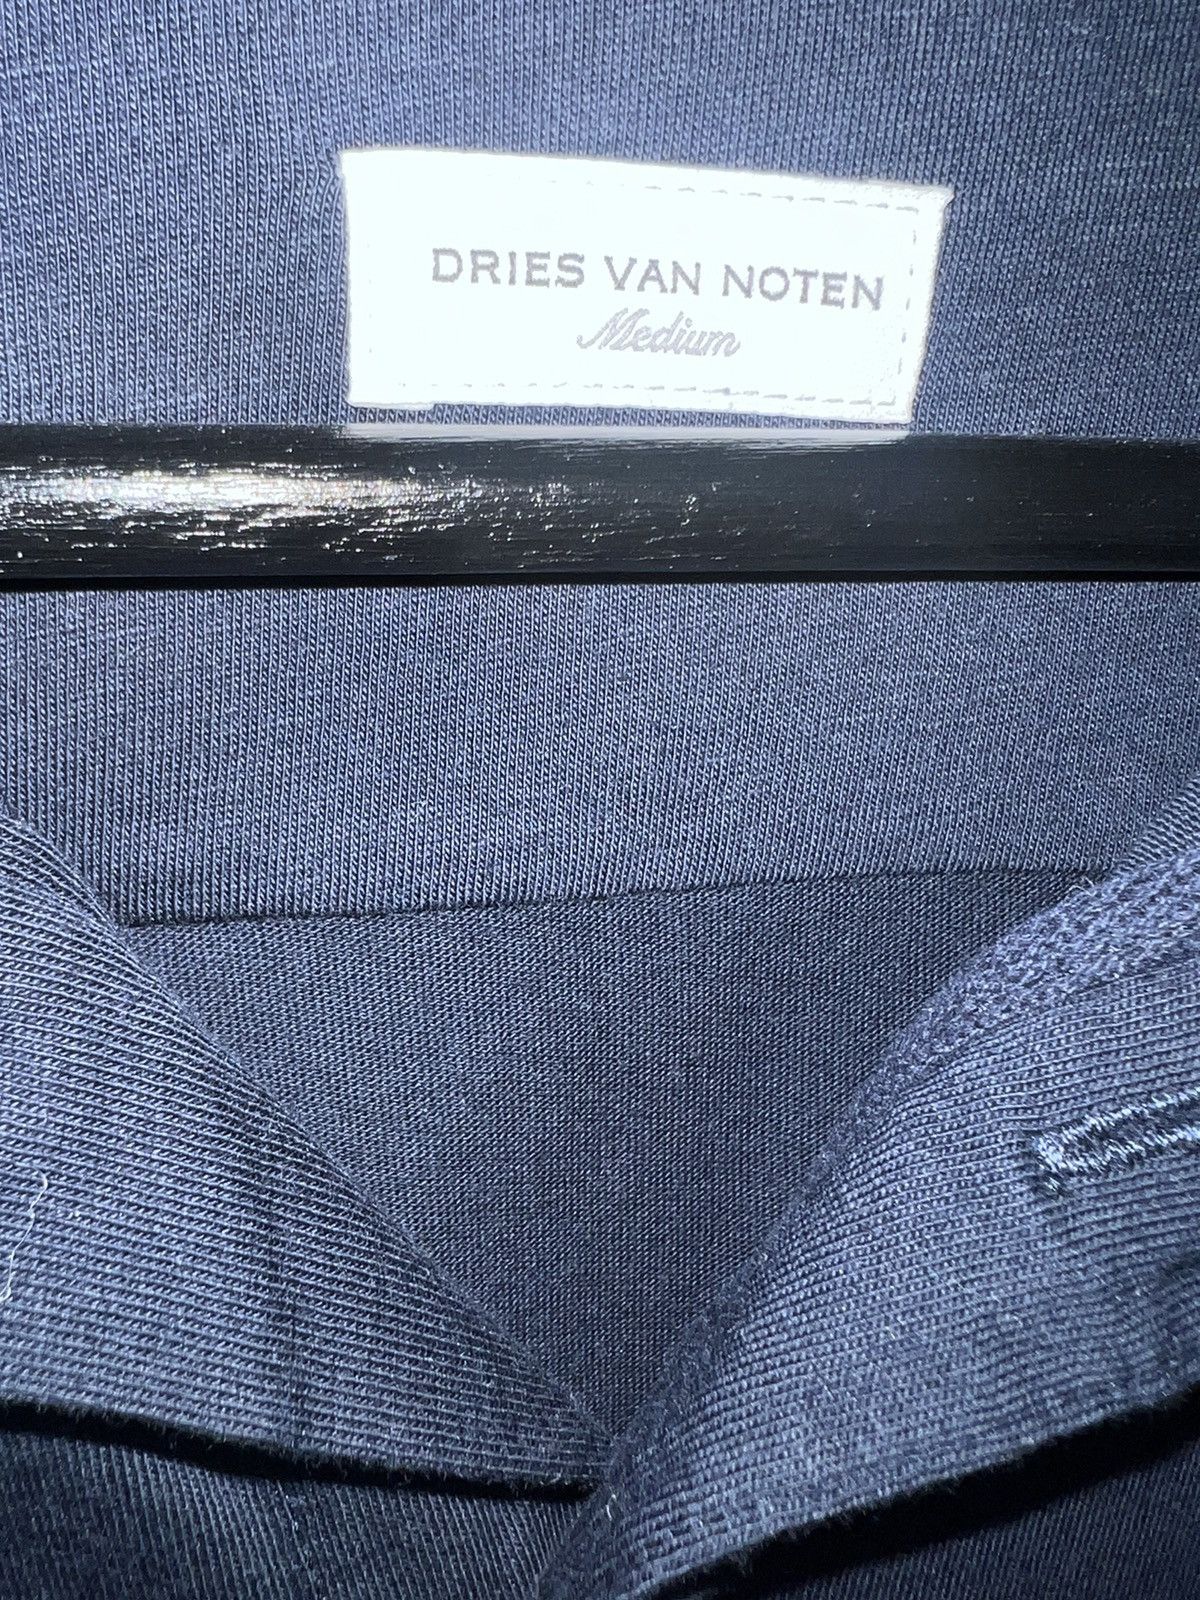 Dries Van Noten Dries Van Noten Polo Shirt Size US M / EU 48-50 / 2 - 2 Preview